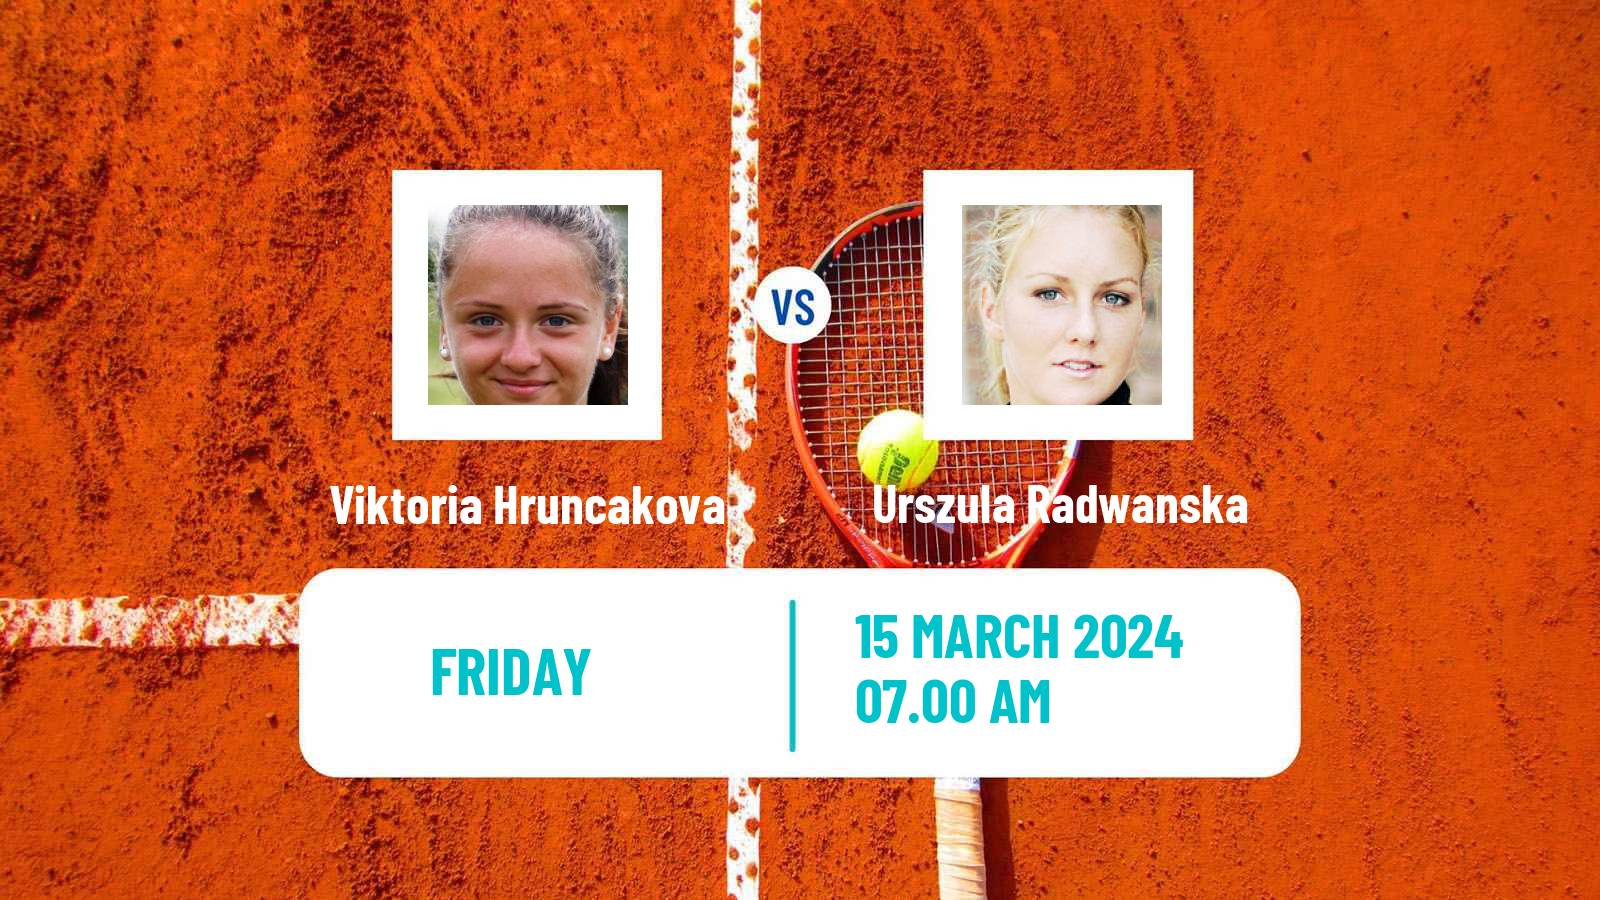 Tennis ITF W35 Solarino 2 Women Viktoria Hruncakova - Urszula Radwanska